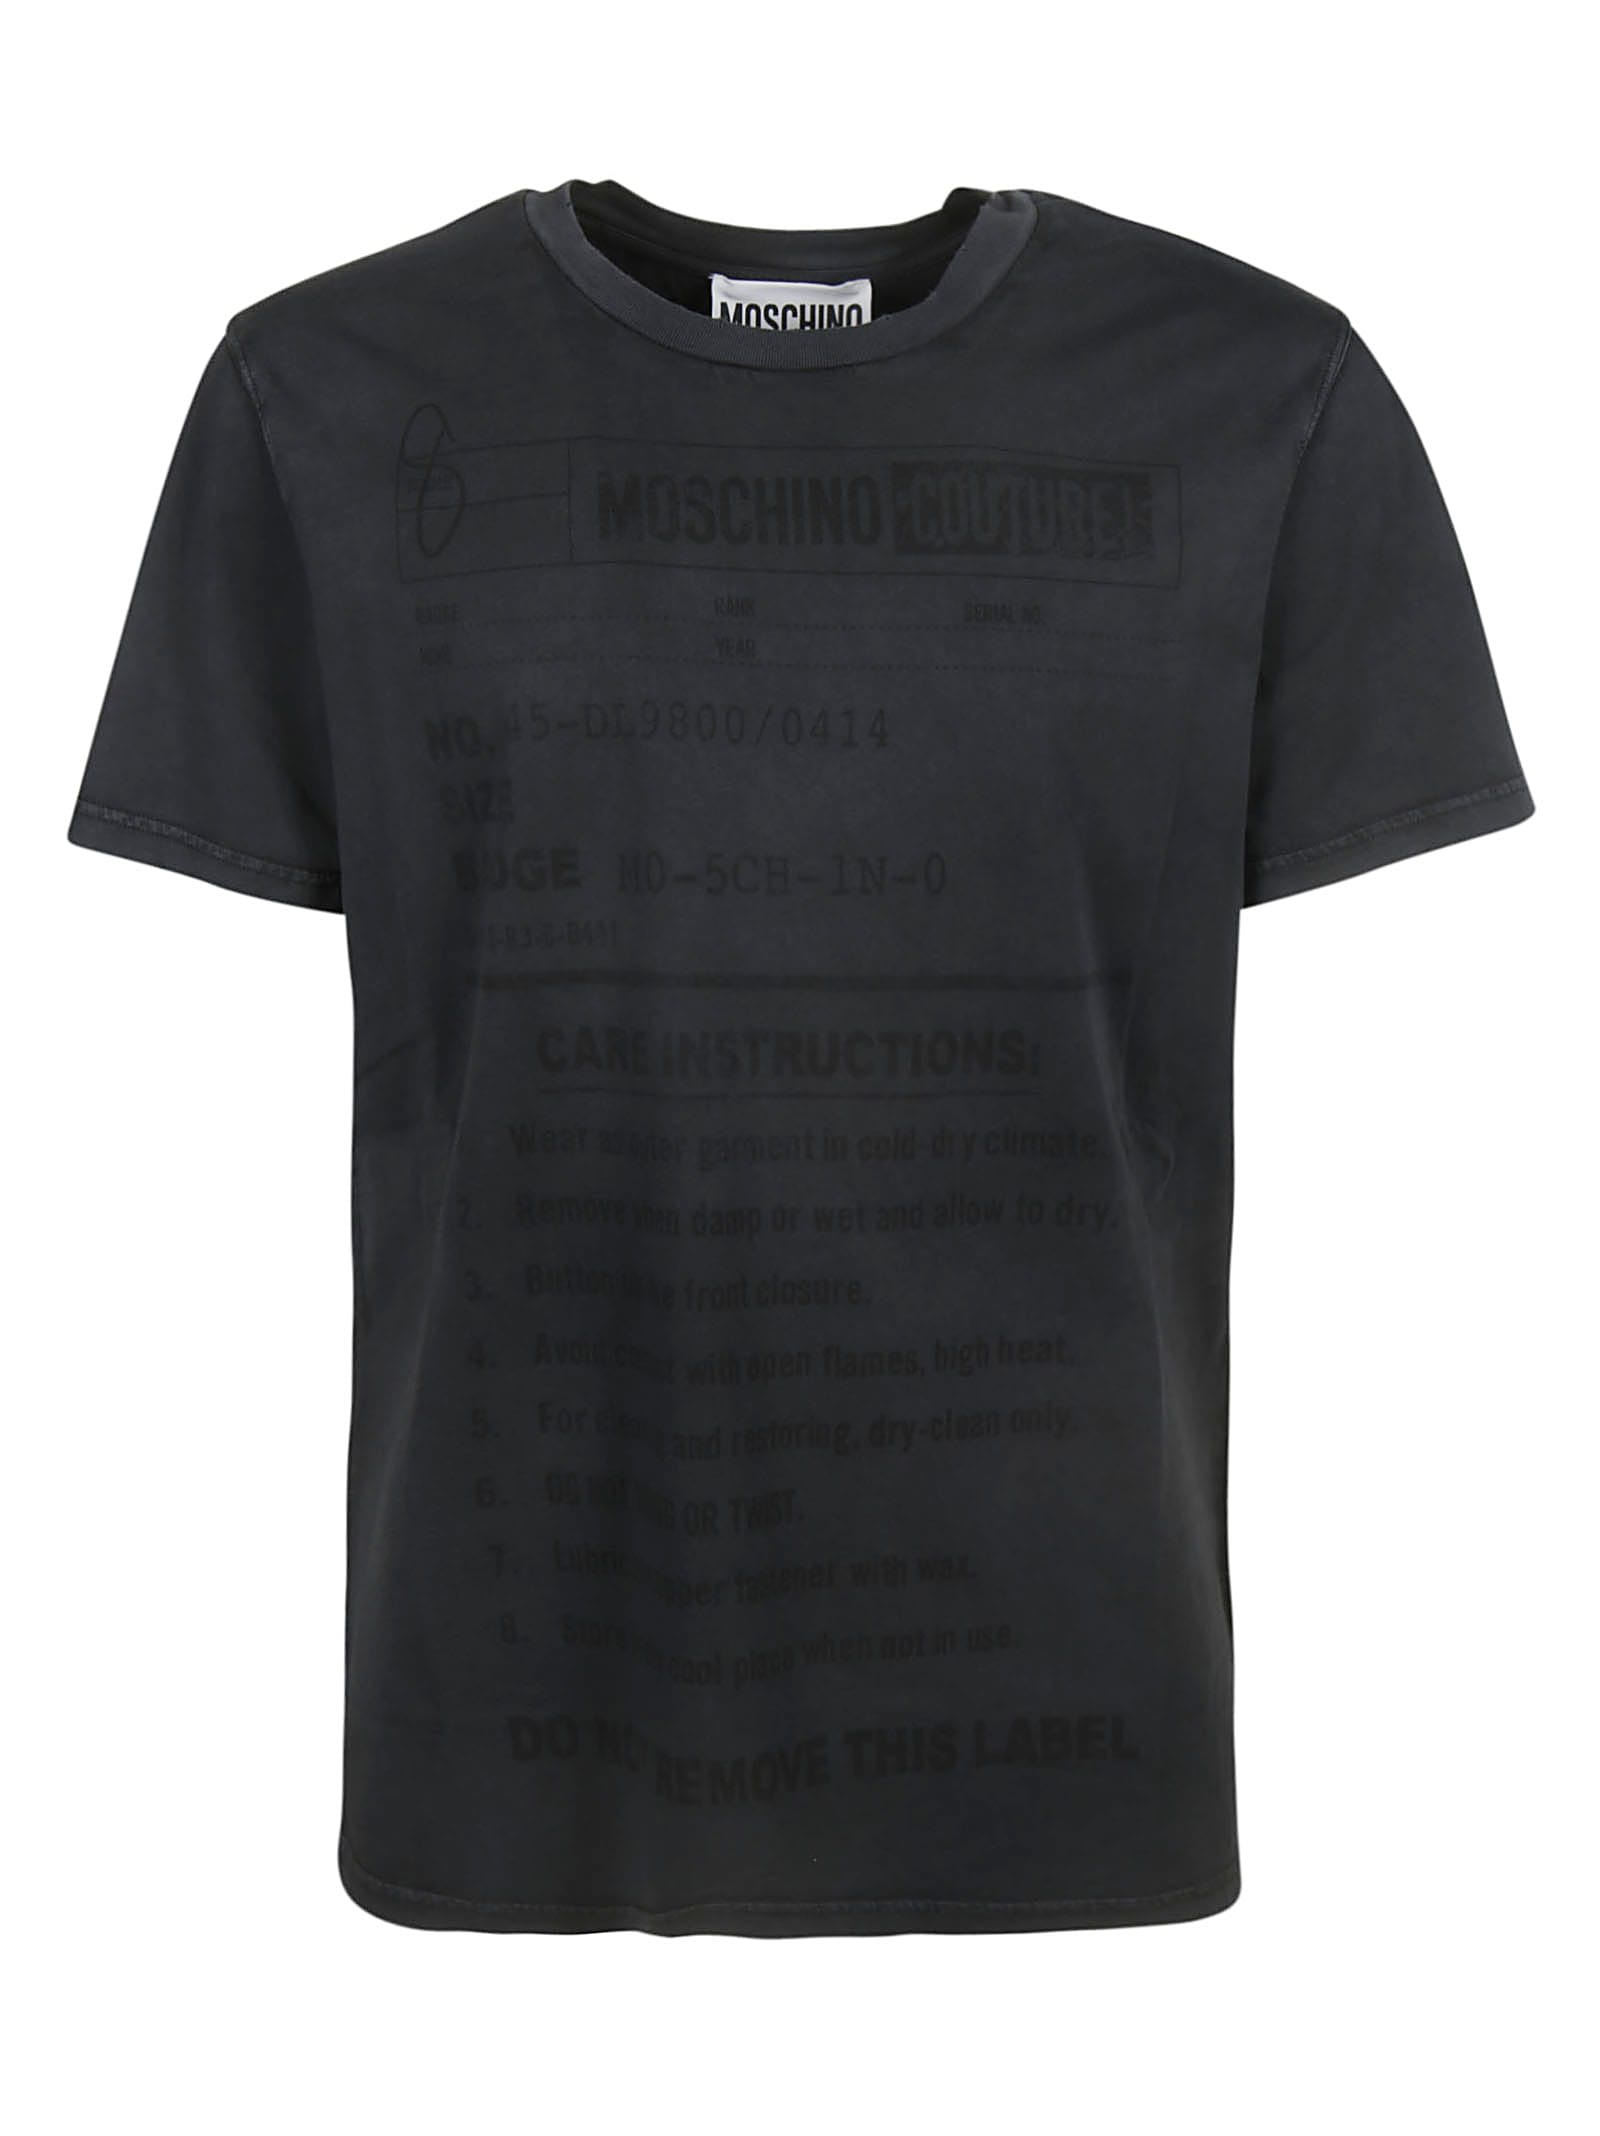 Moschino Printed T-shirt In Black | ModeSens